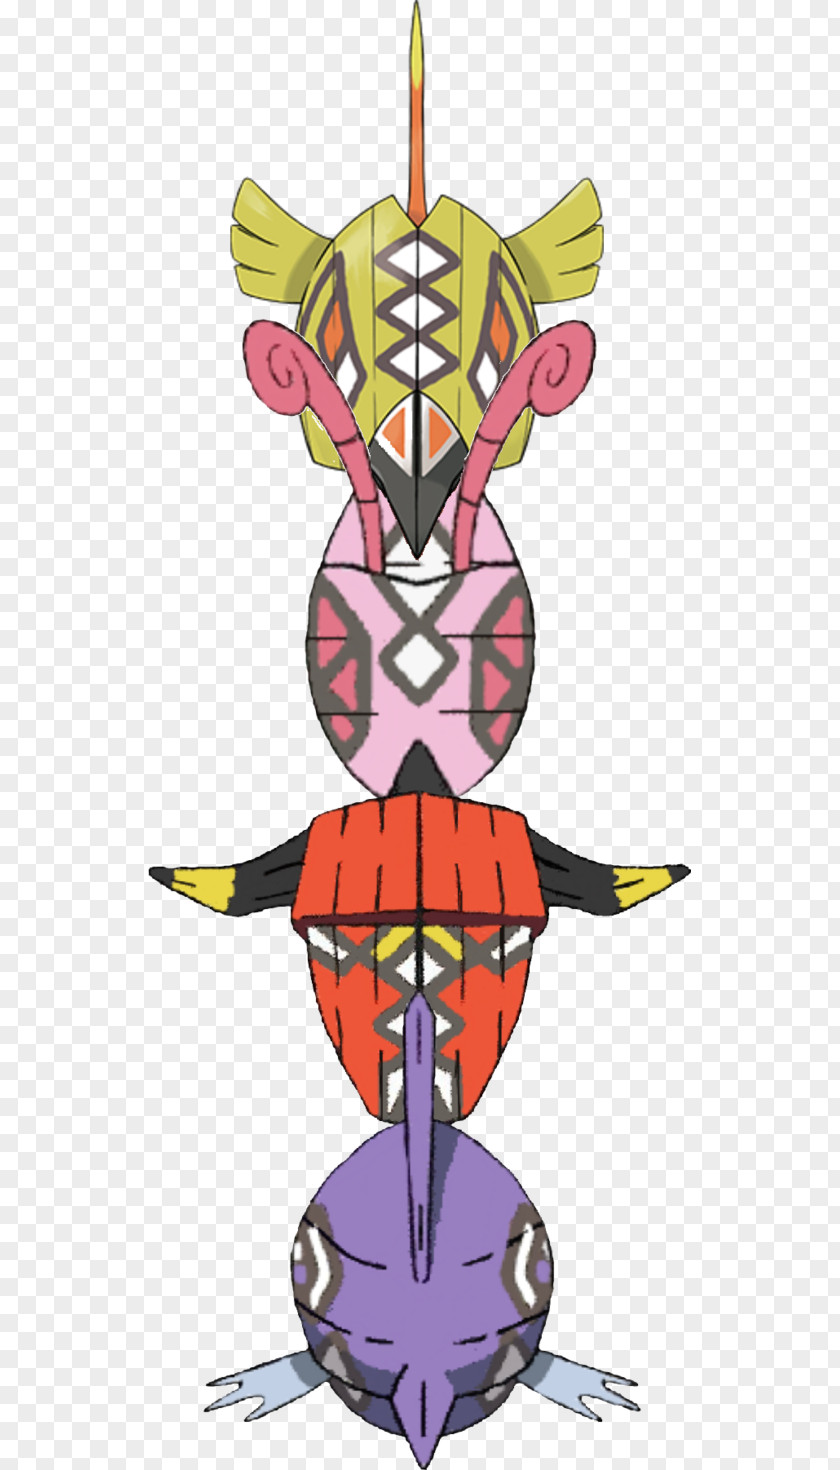 Totem Art Pokémon Sun And Moon Illustration Image PNG